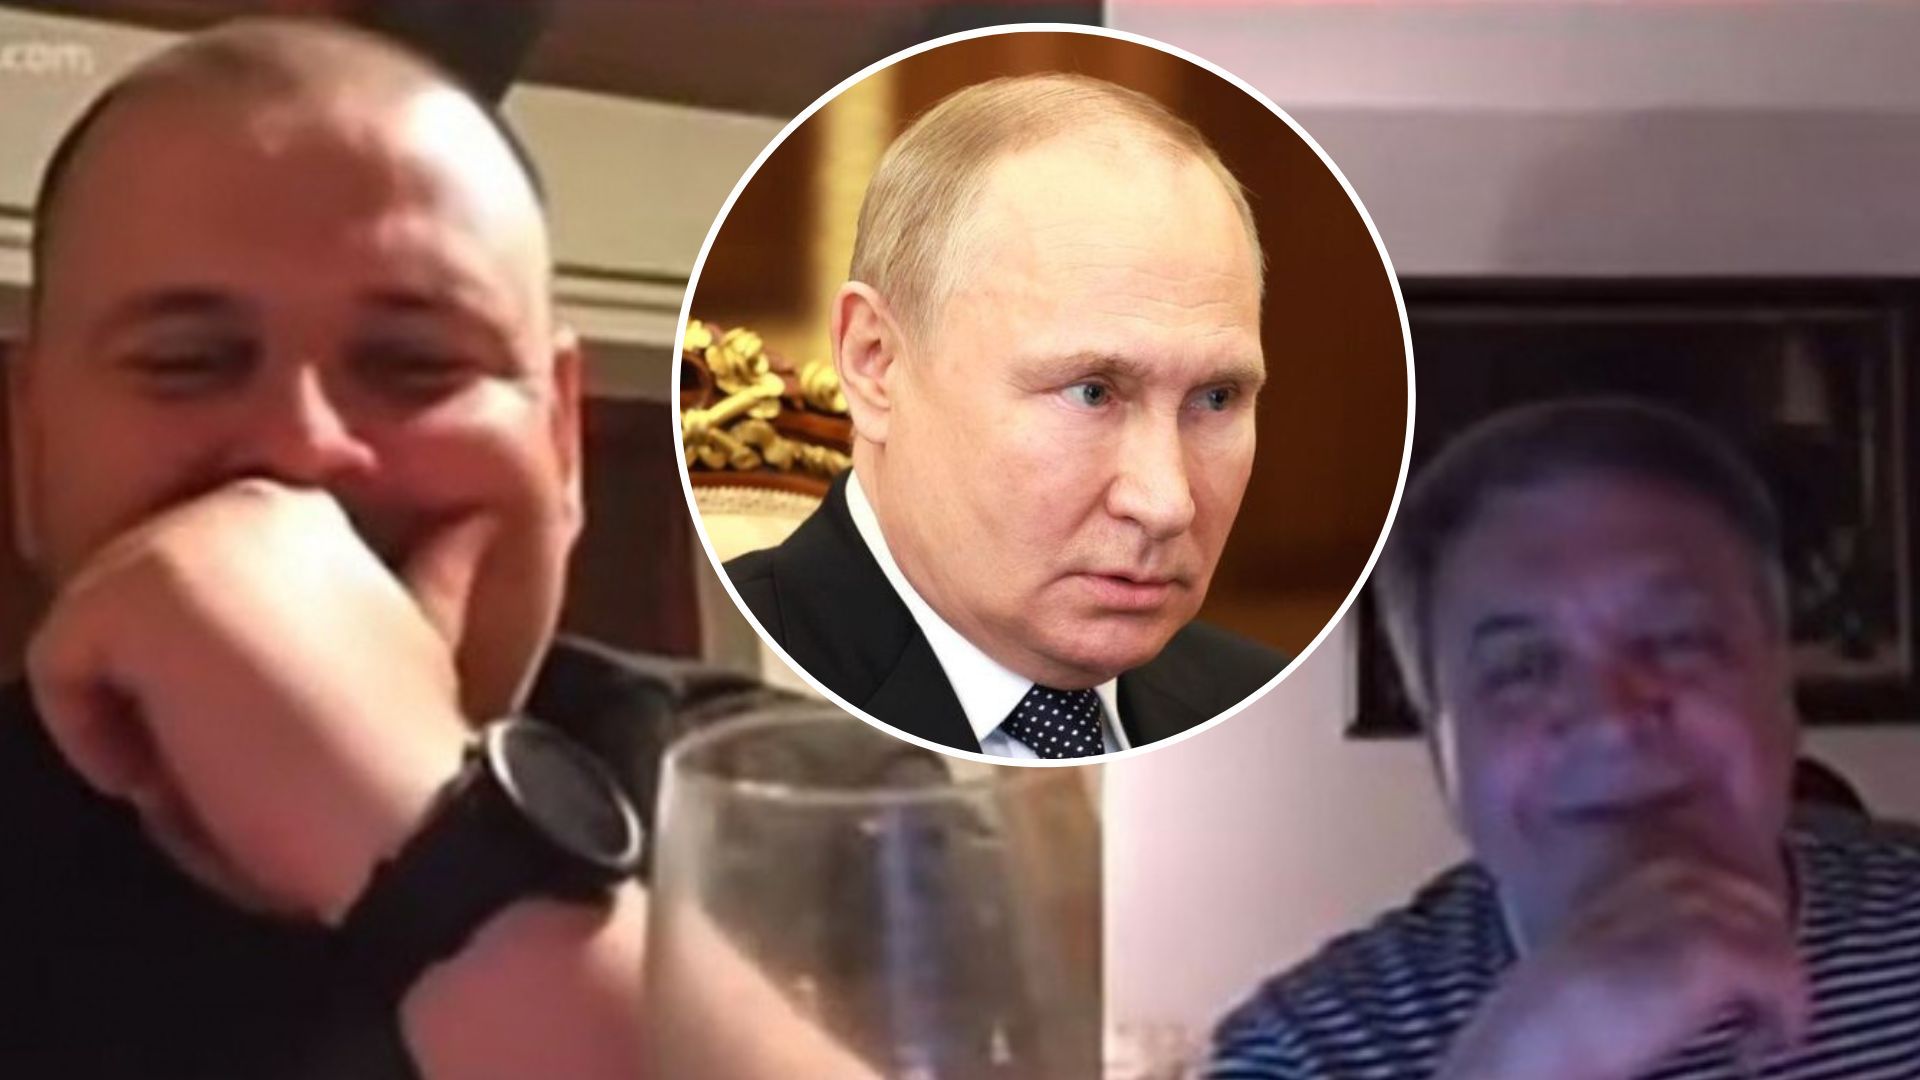 Закарпатець вляпався у скандал - він заявив, що є фанатом Путіна - 24 Канал